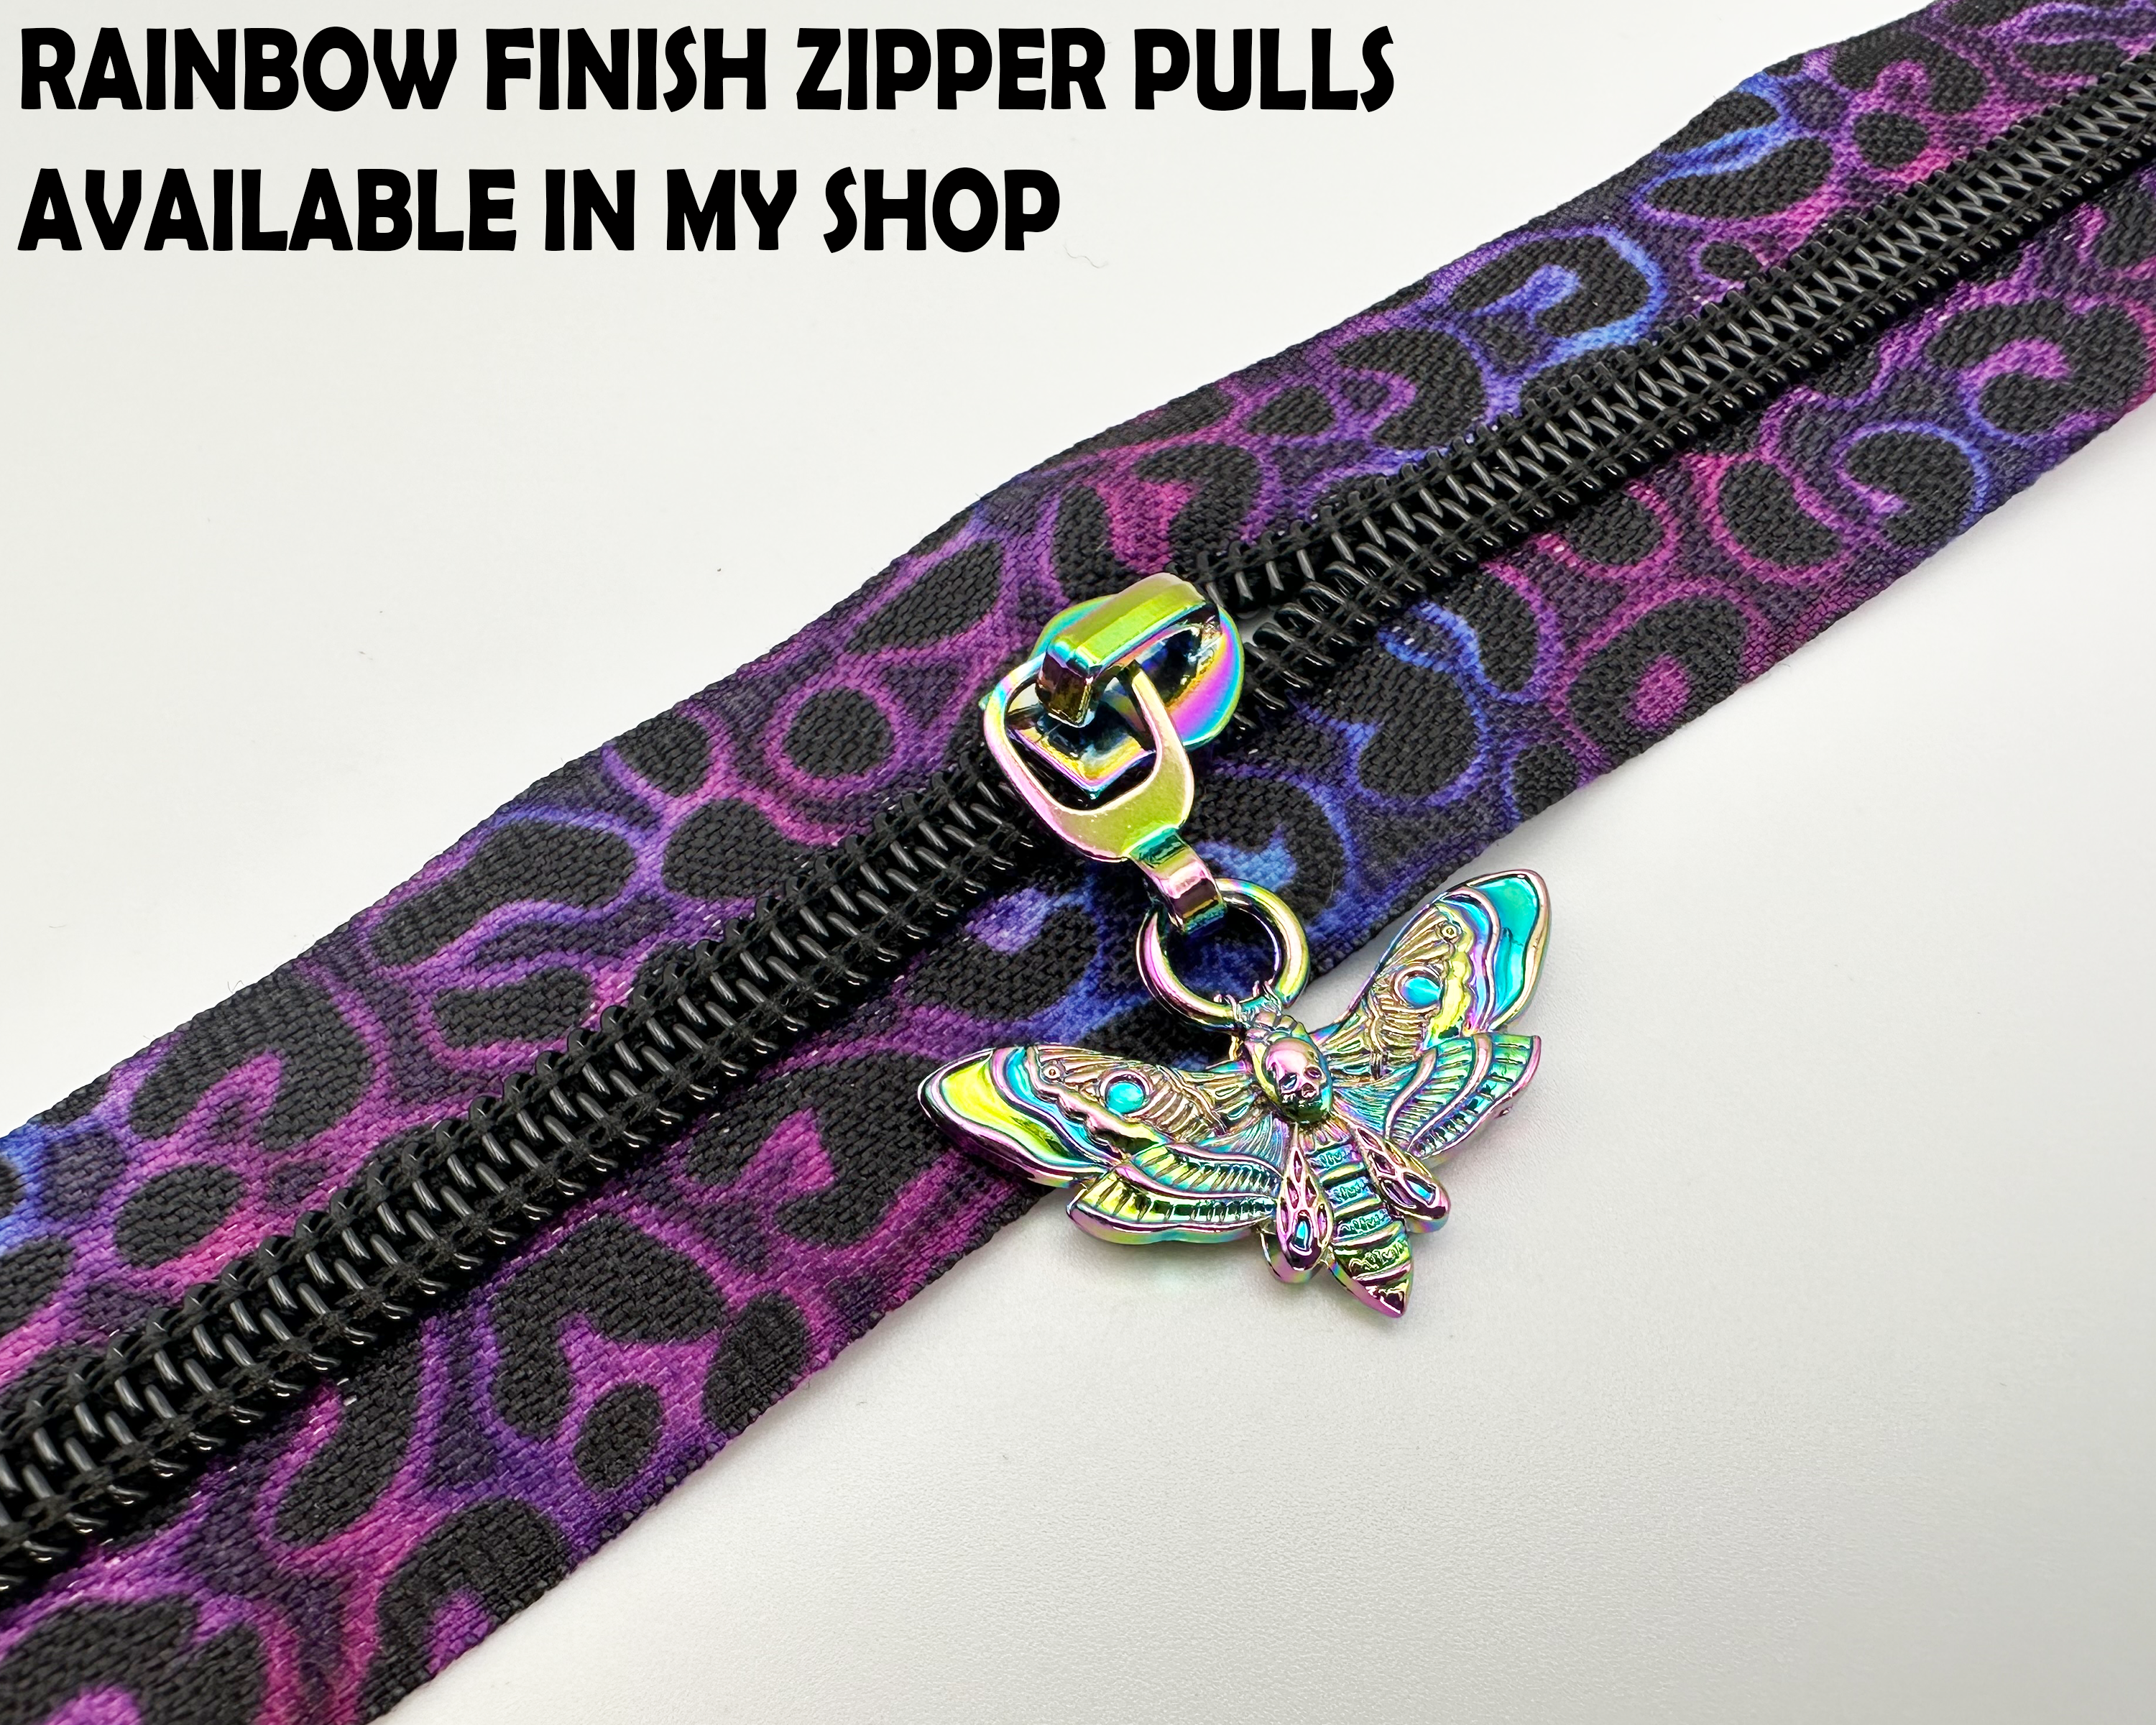 Purple & Blue Flame Print Zipper Tape with Black teeth, #5 nylon zips, bag making supplies